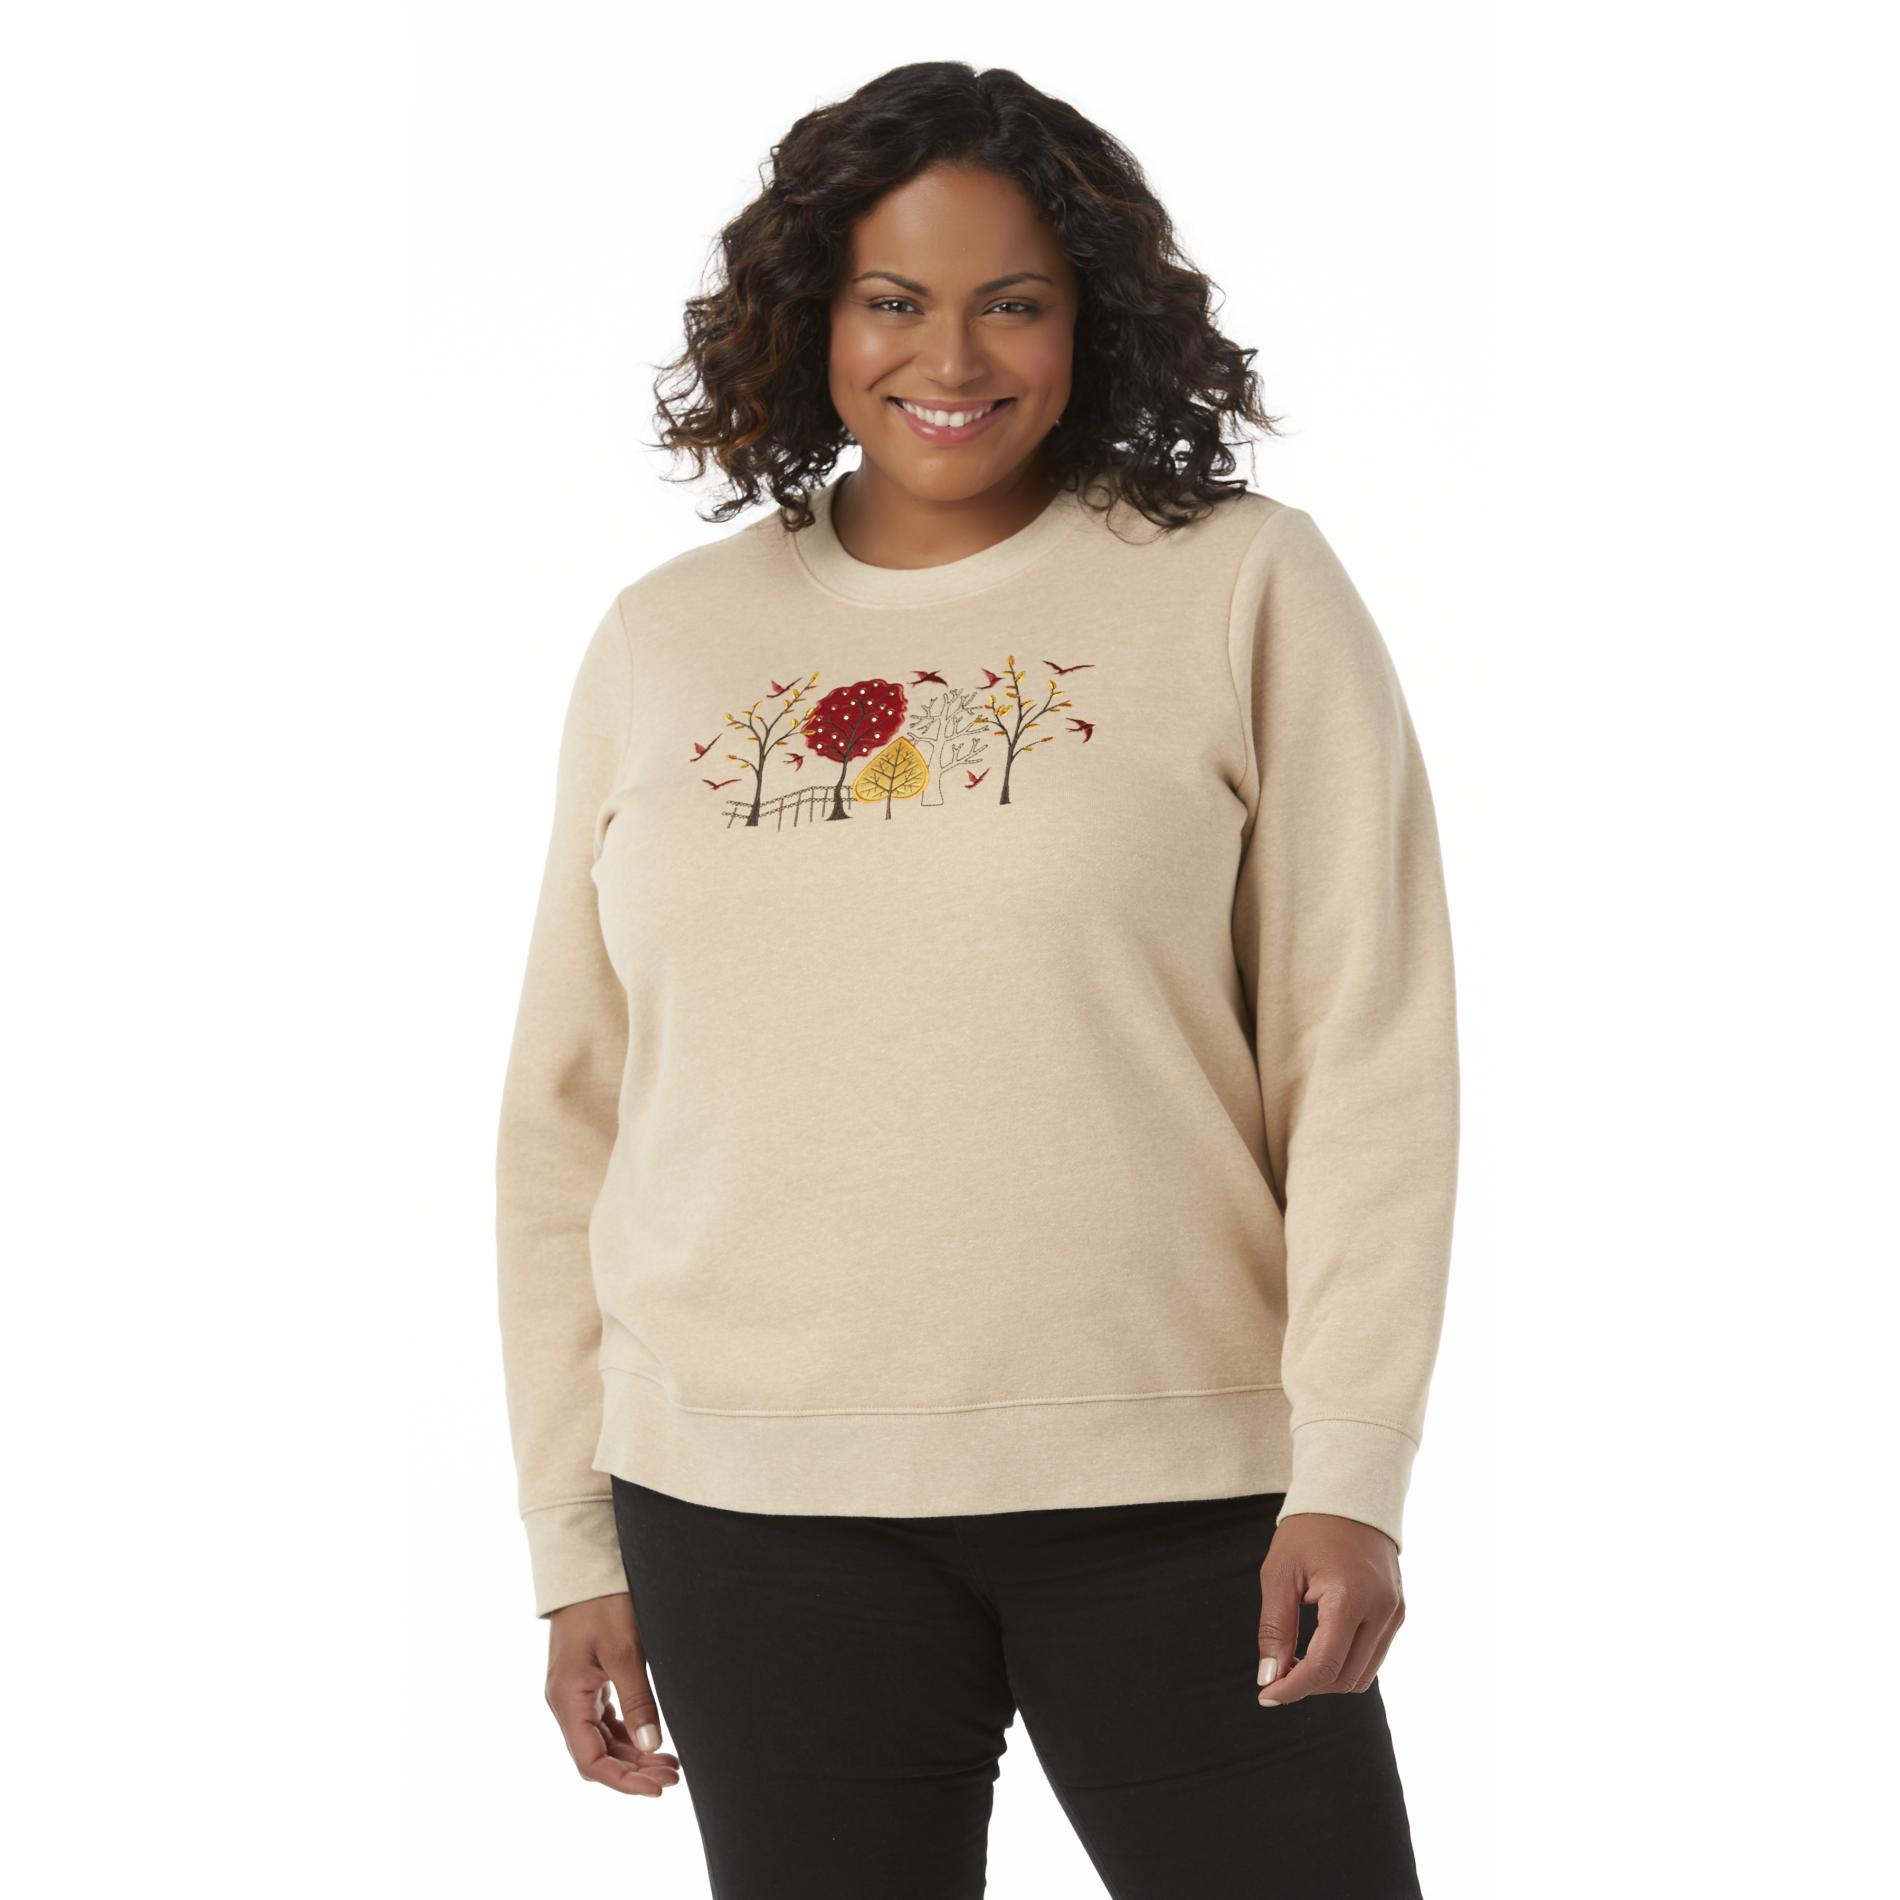 Womens Embroidered Sweatshirt | Kmart.com